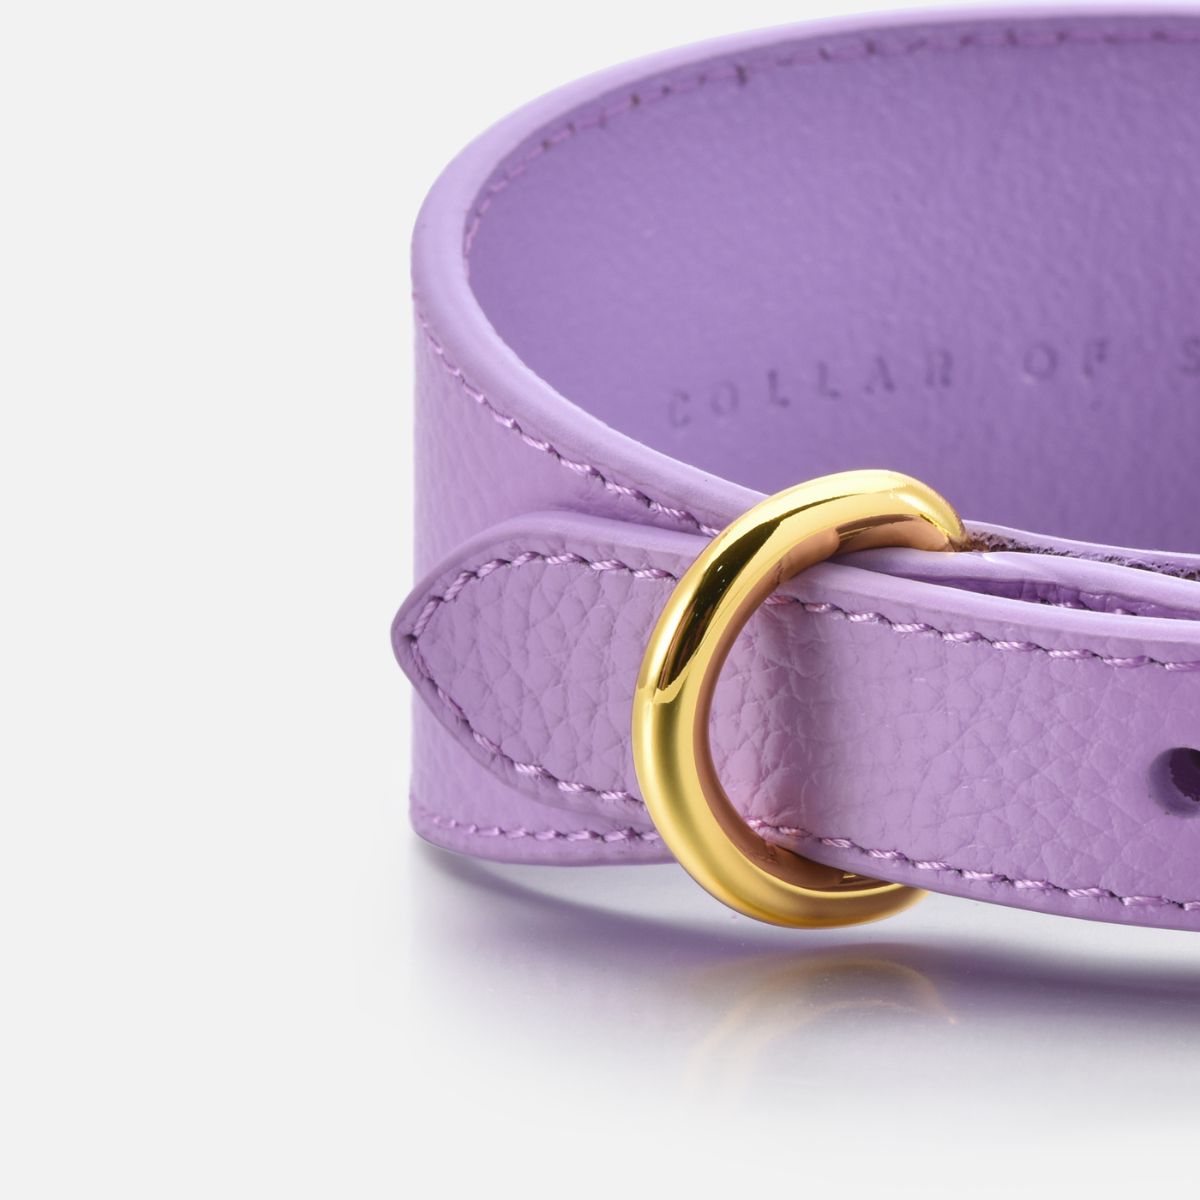 Violettes Hundehalsband Breit